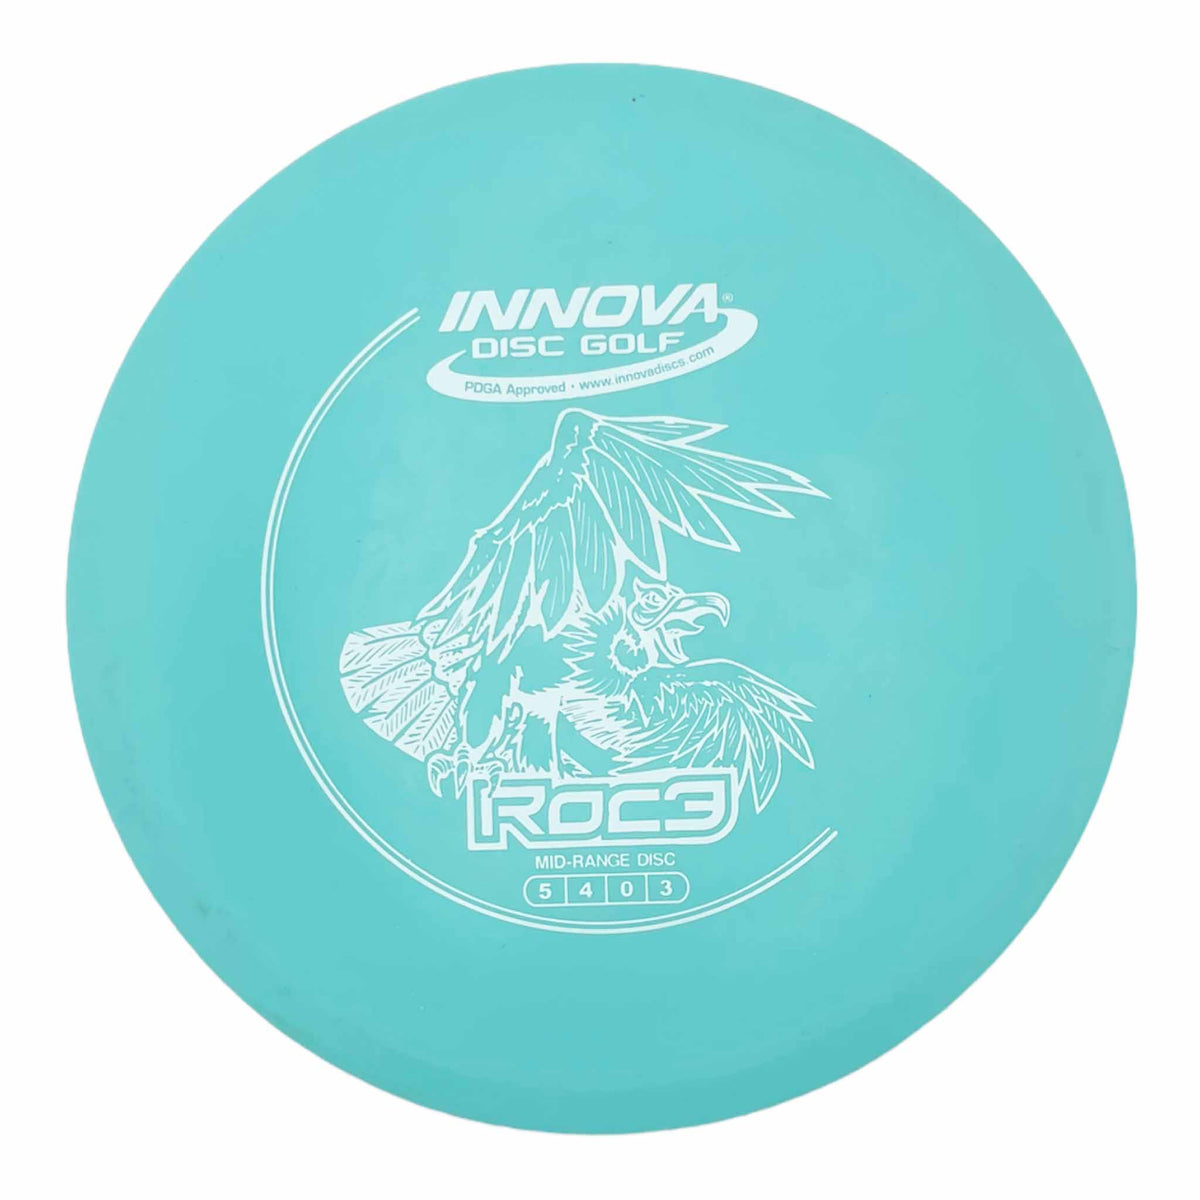 Innova Disc Golf DX Roc3 midrange - Teal